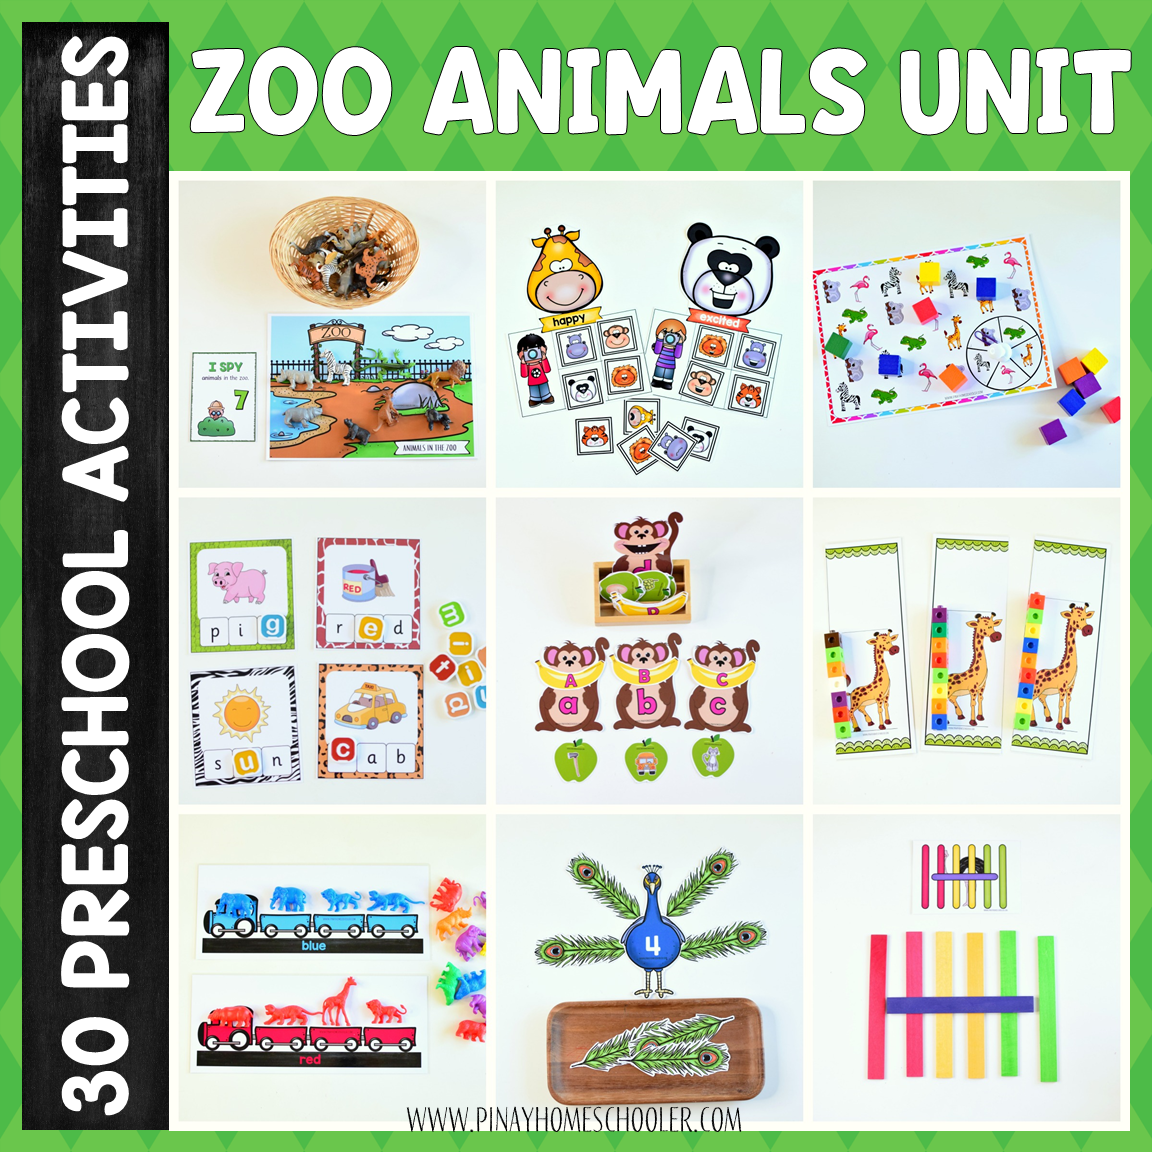 Zoo Preschool Math and Literacy Pack